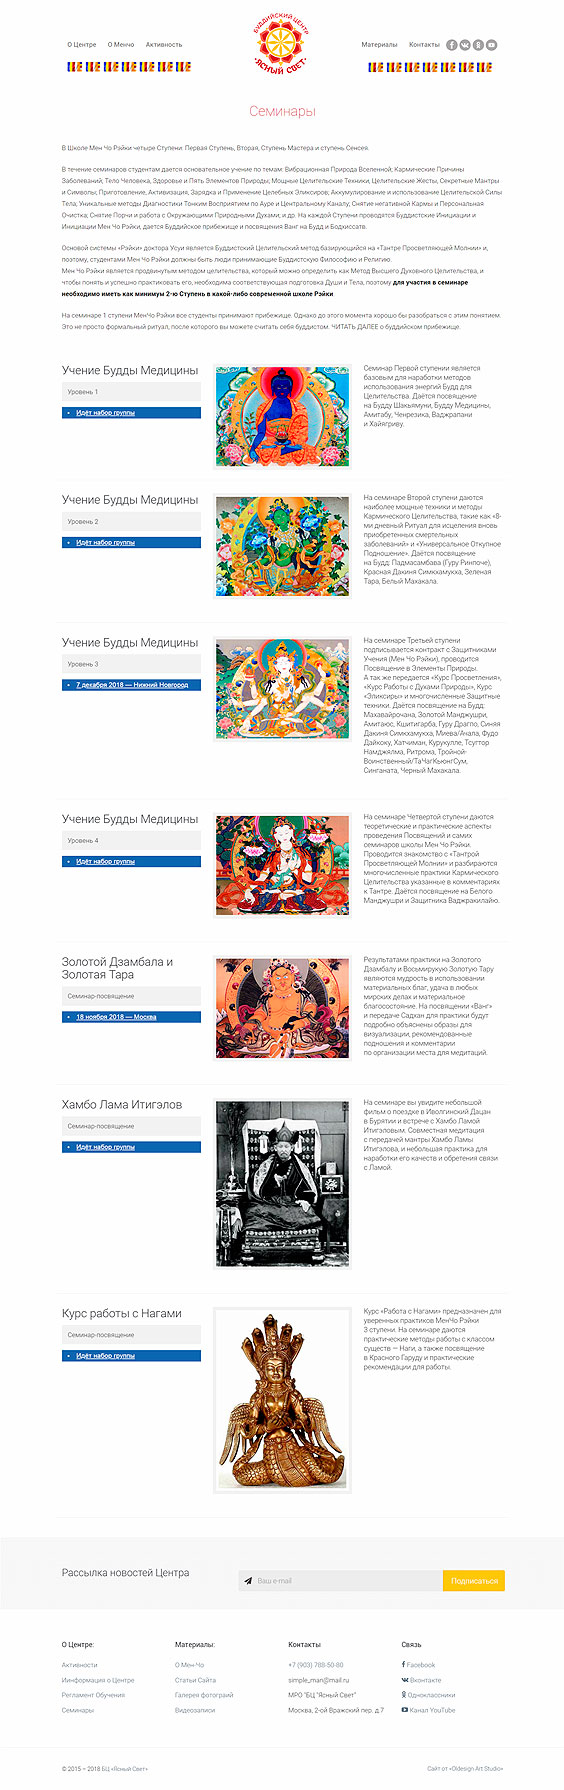 сайт для буддистов